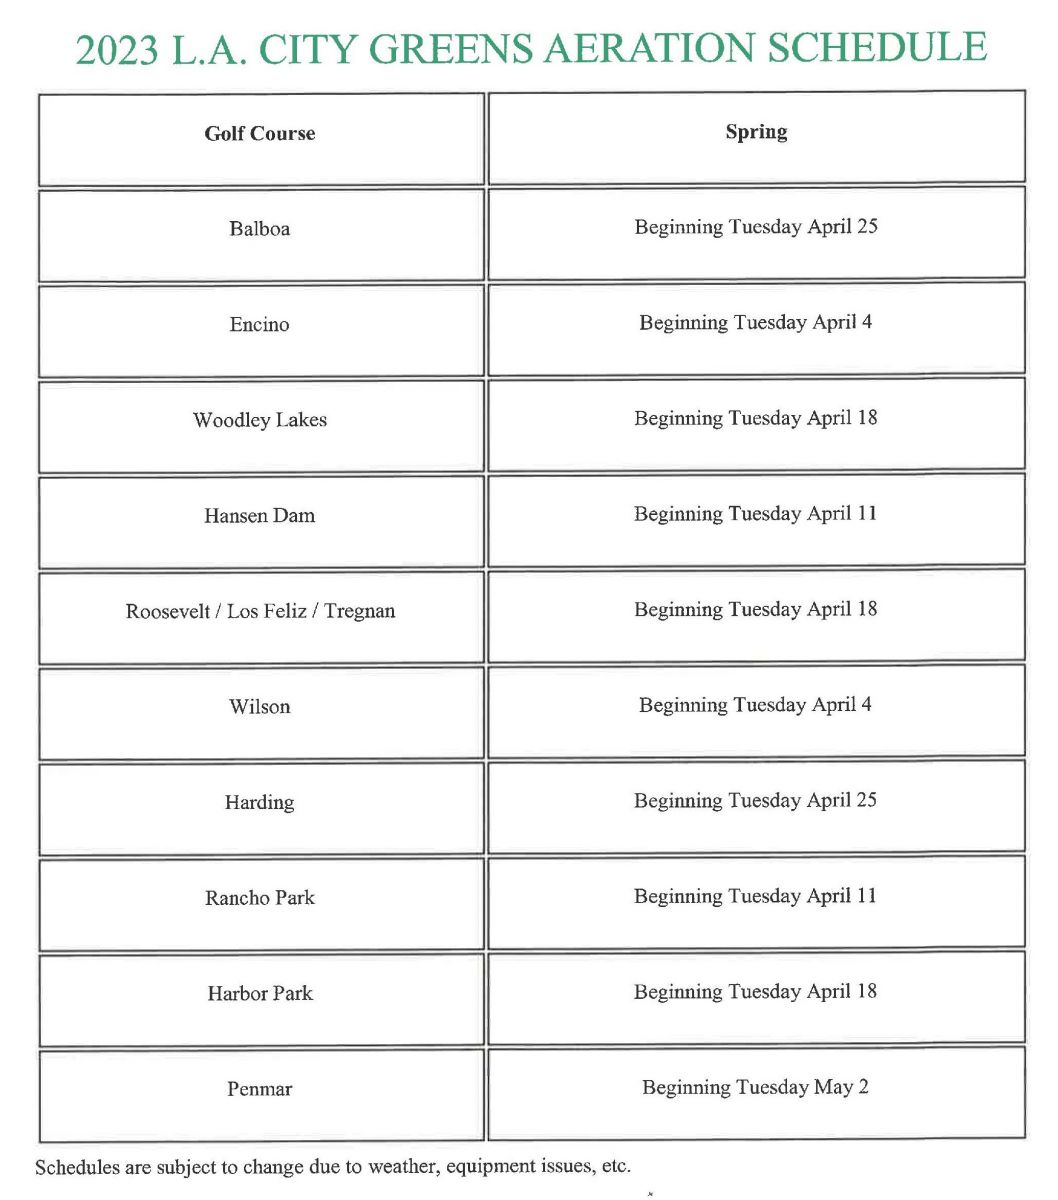 Aeration Schedule L.A. City Golf Courses